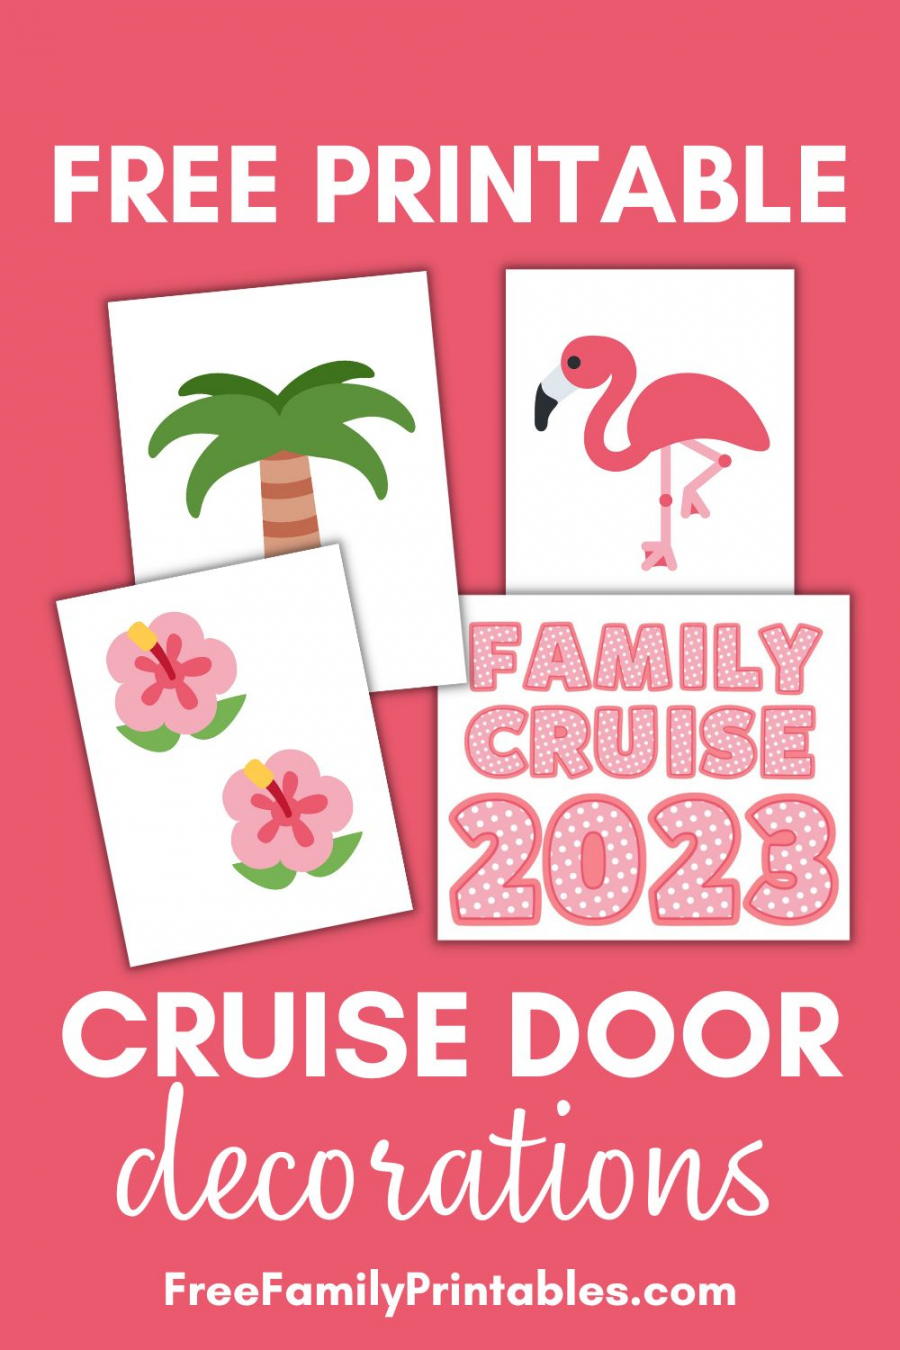 Free Printable Cruise Door Decorations - Free Family Printables - FREE Printables - Free Printable Cruise Door Decorations